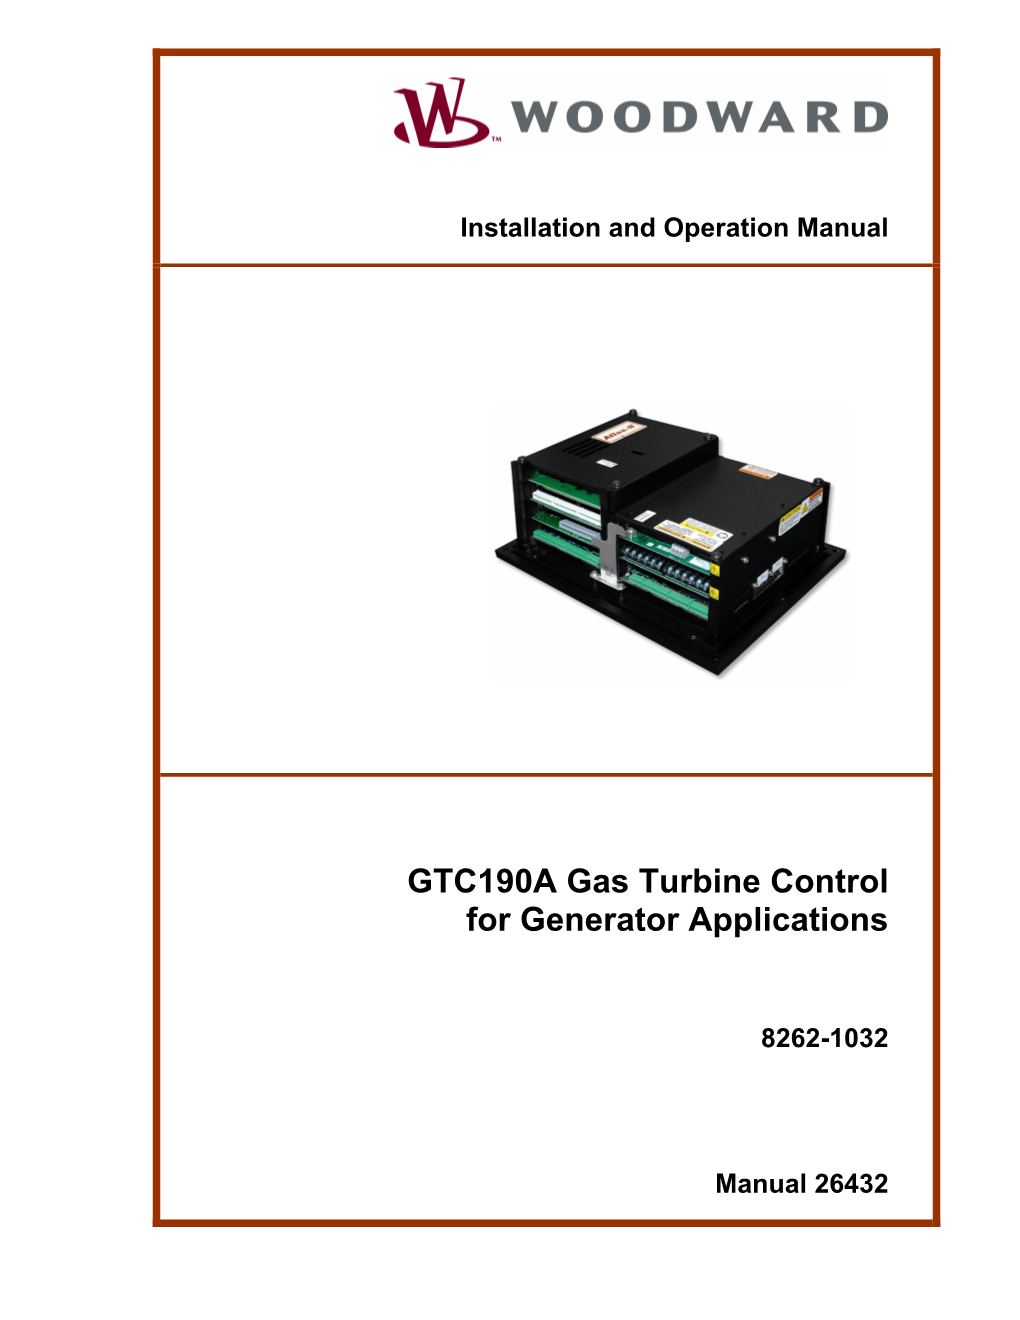 GTC190A Gas Turbine Control for Generator Applications